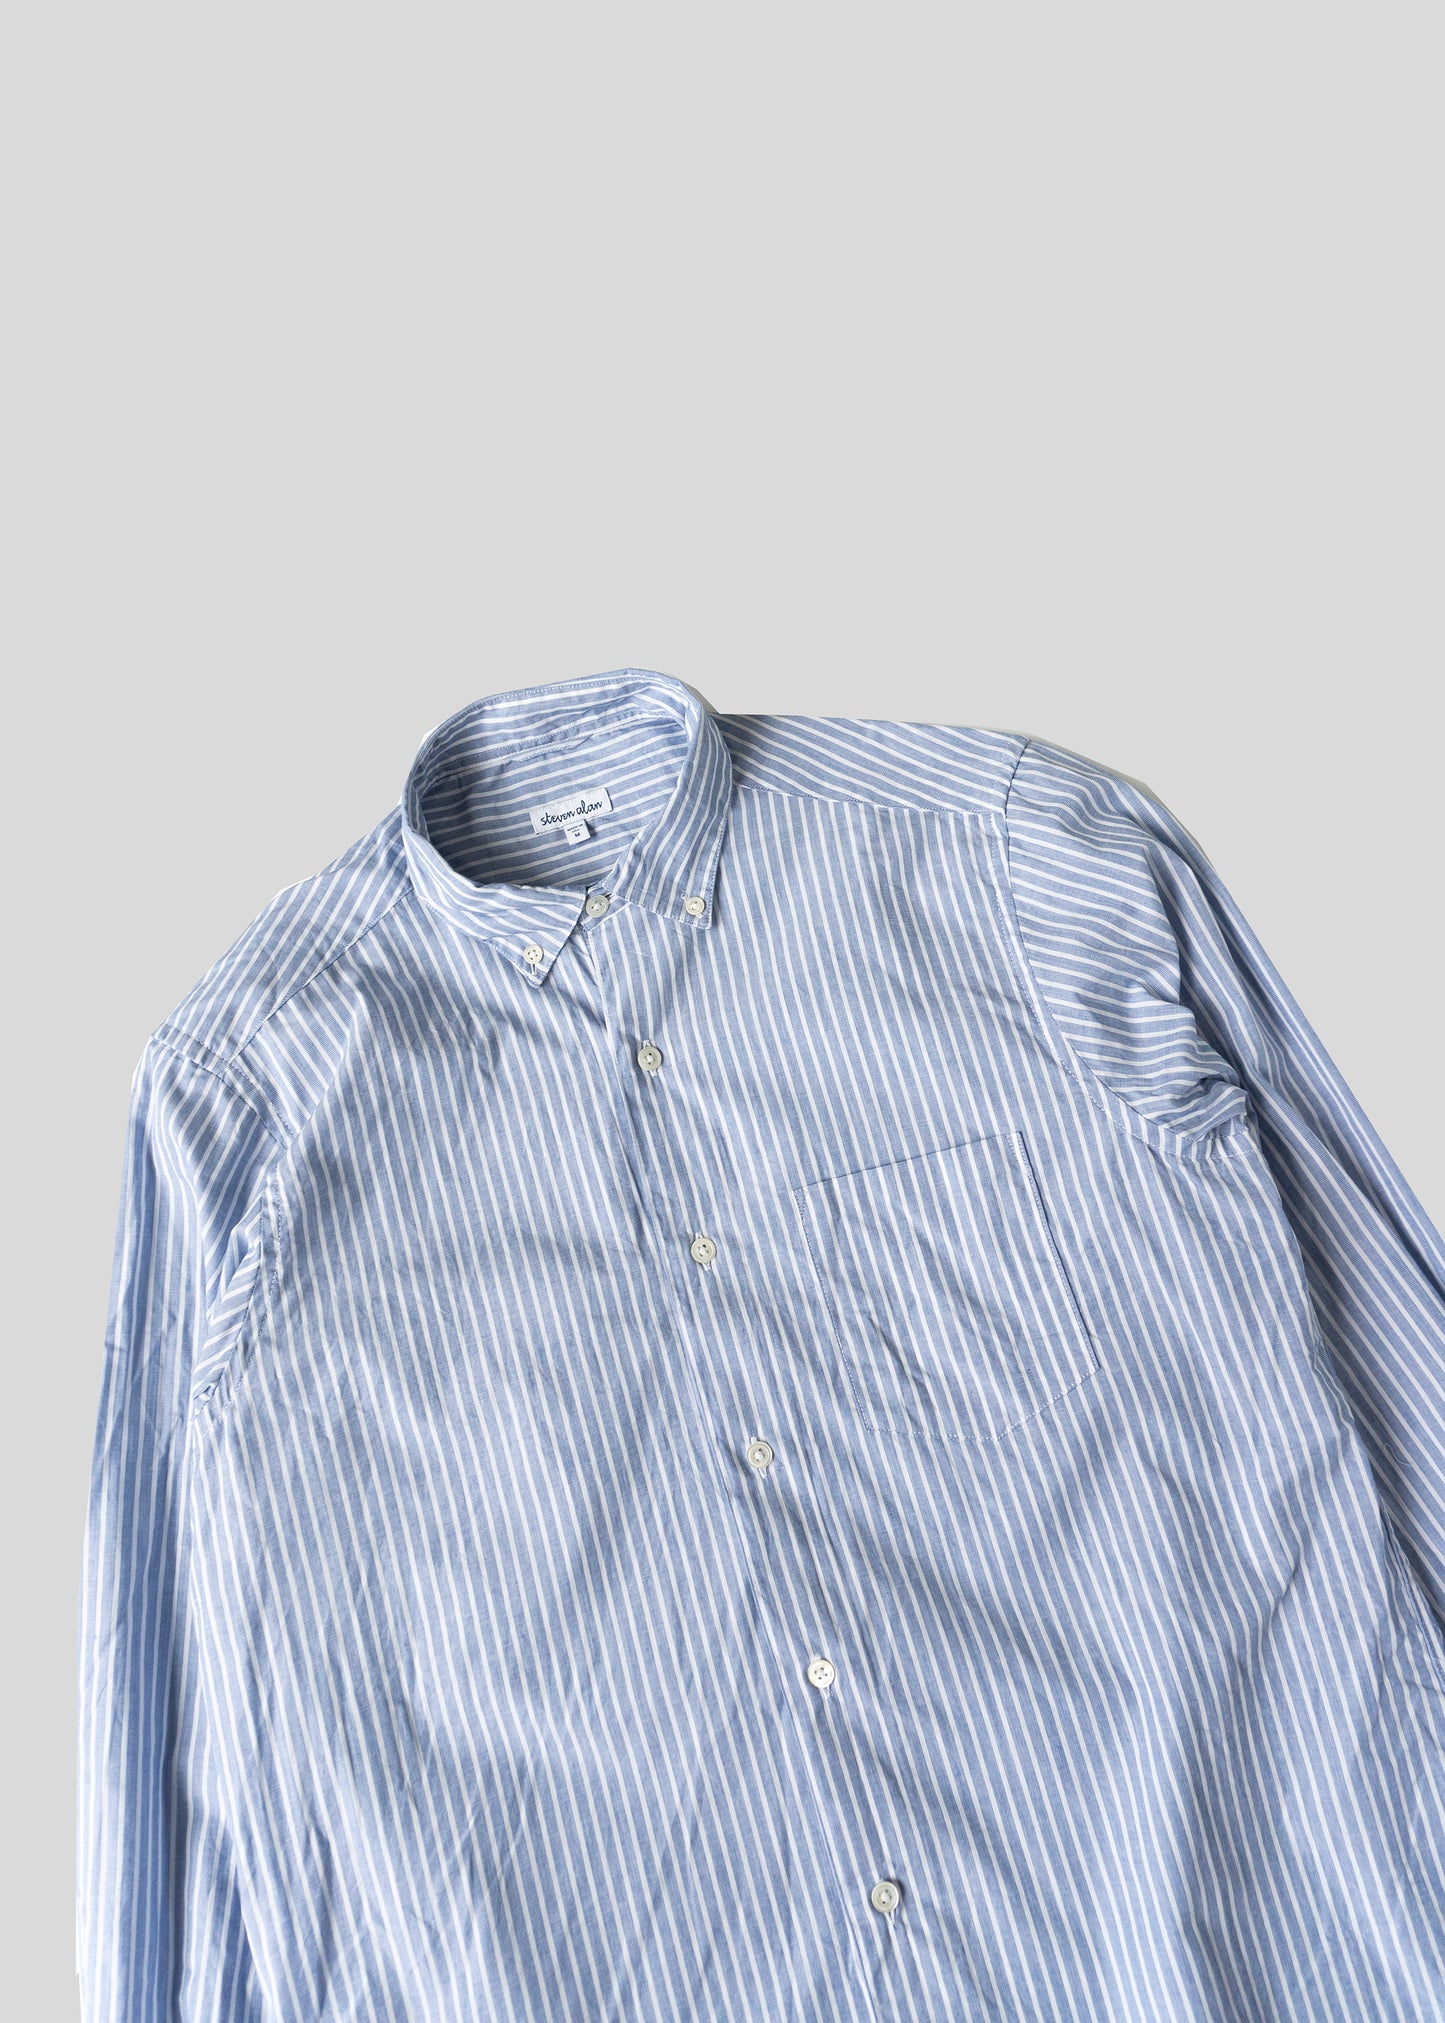 Single Needle Shirt, Pacific Blue Stripe